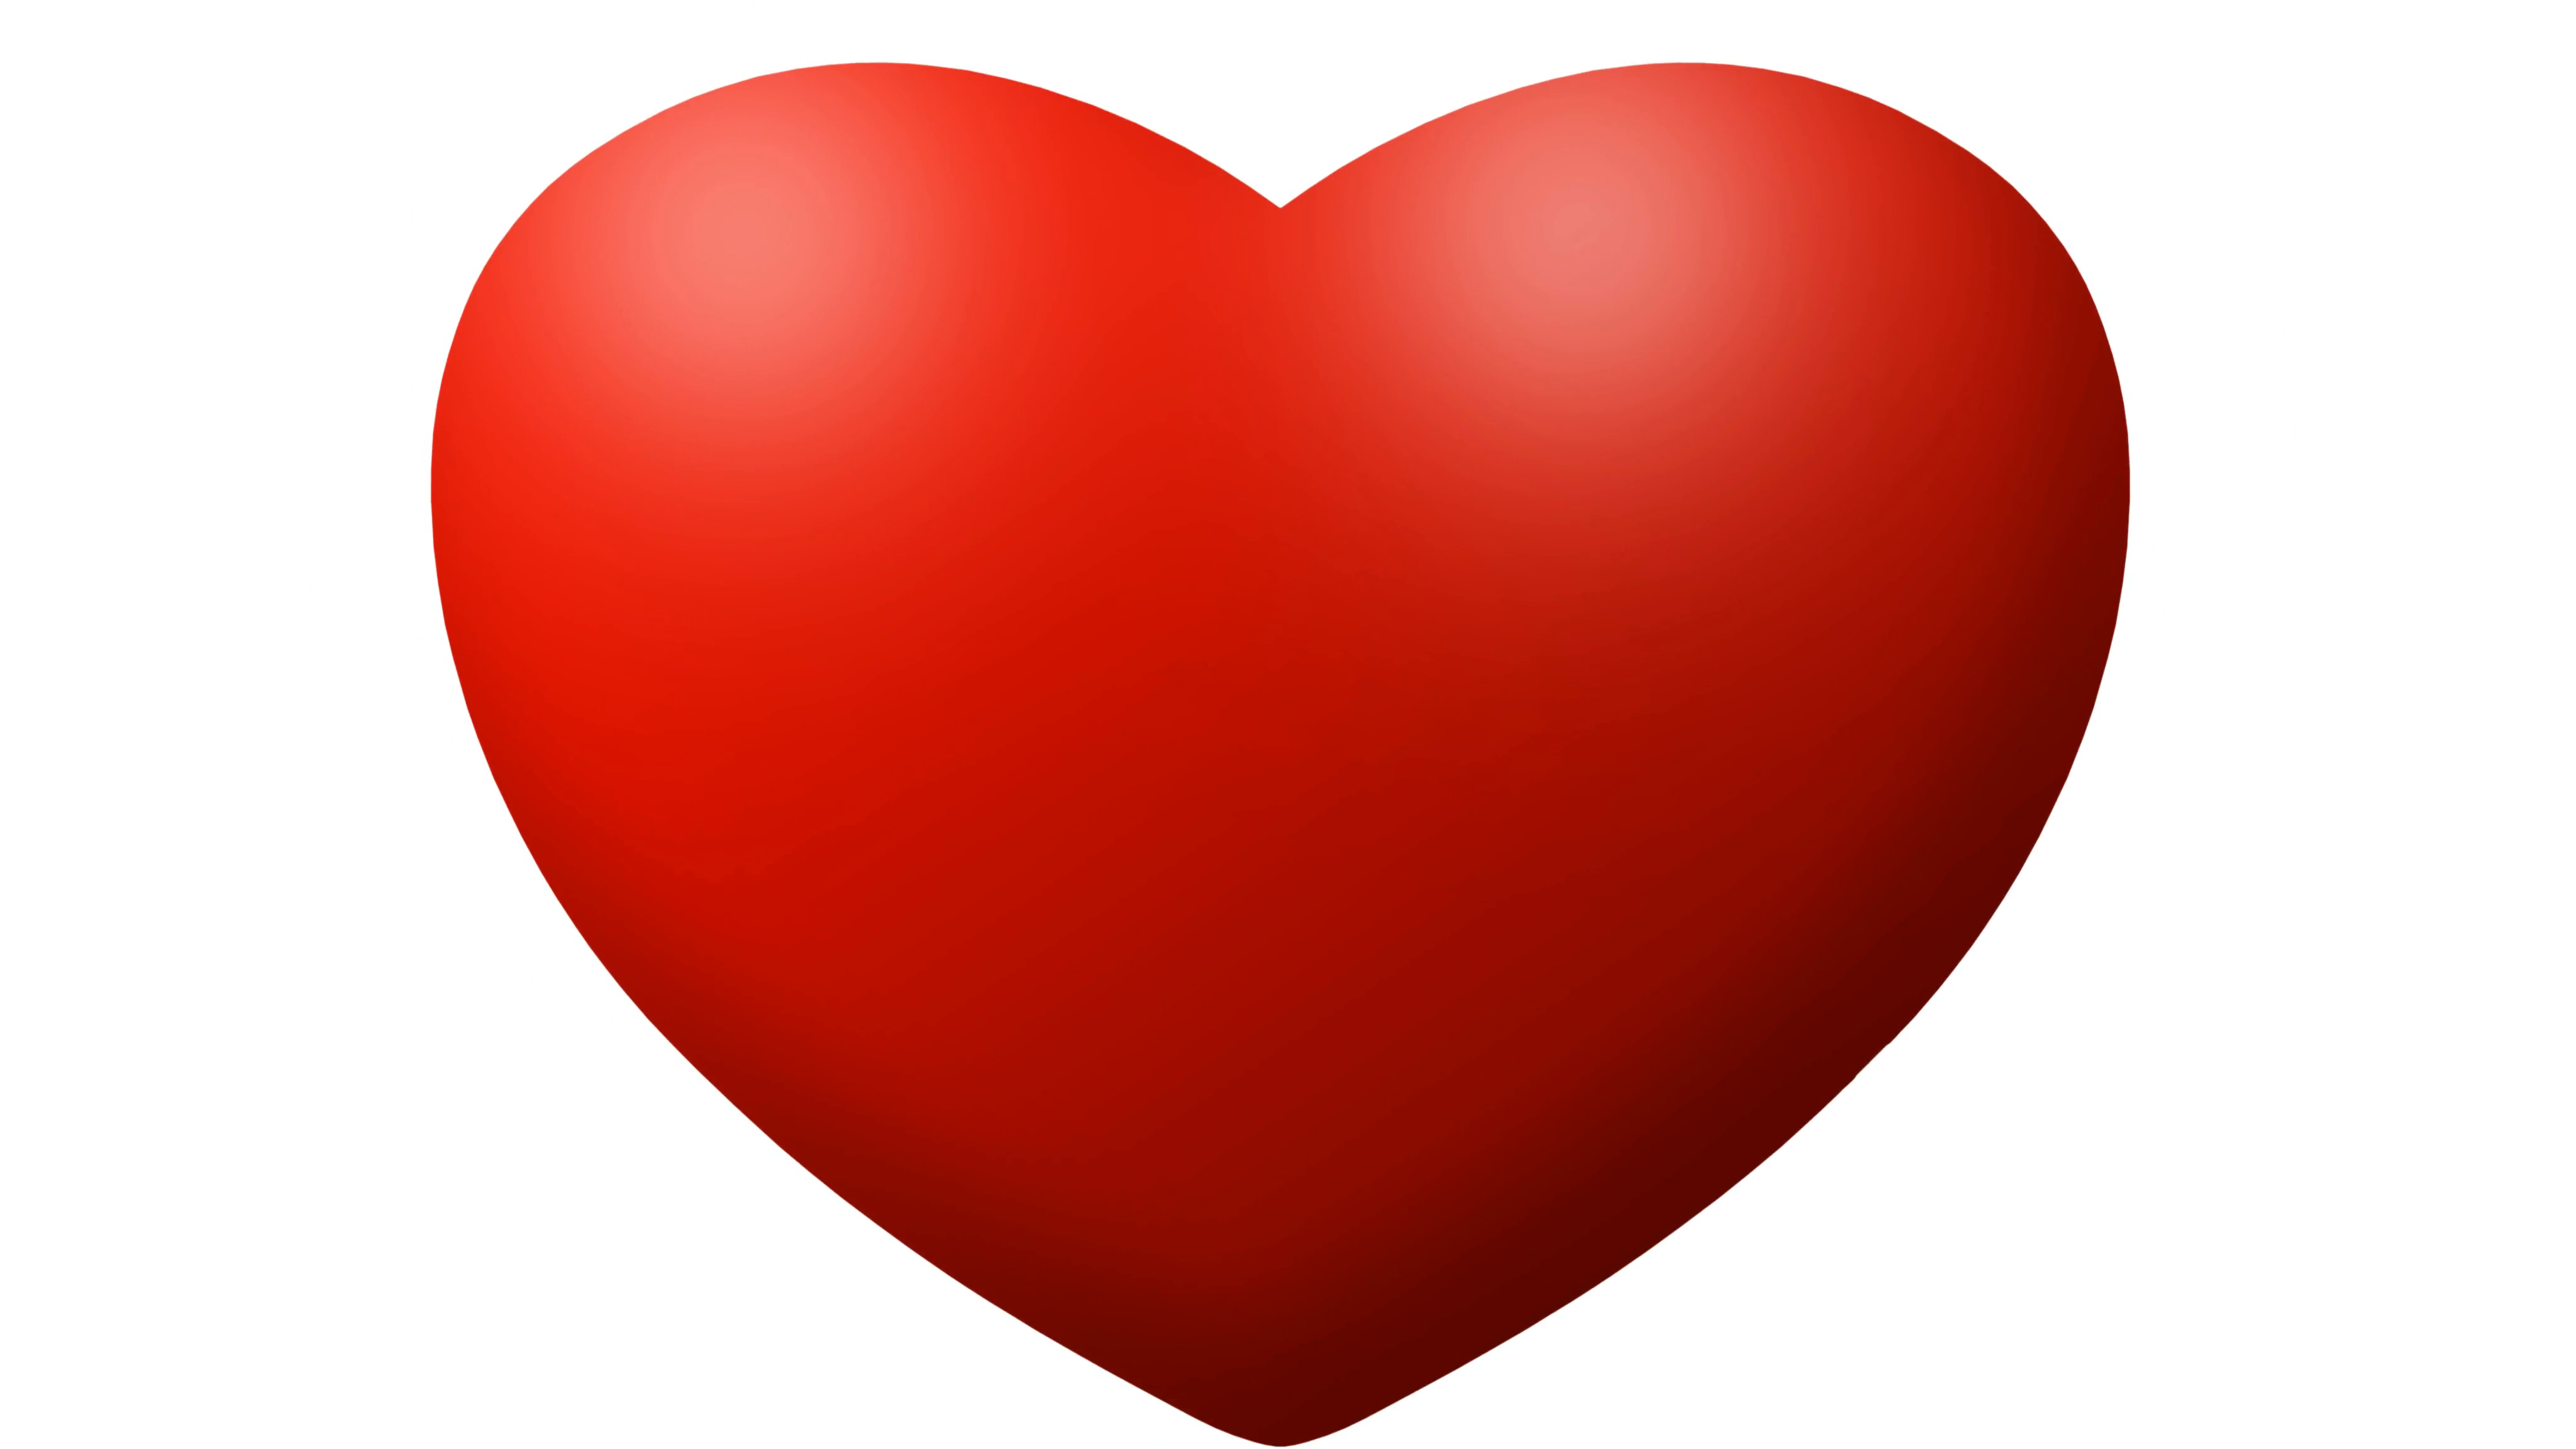 53+] Red Love Heart Background - WallpaperSafari